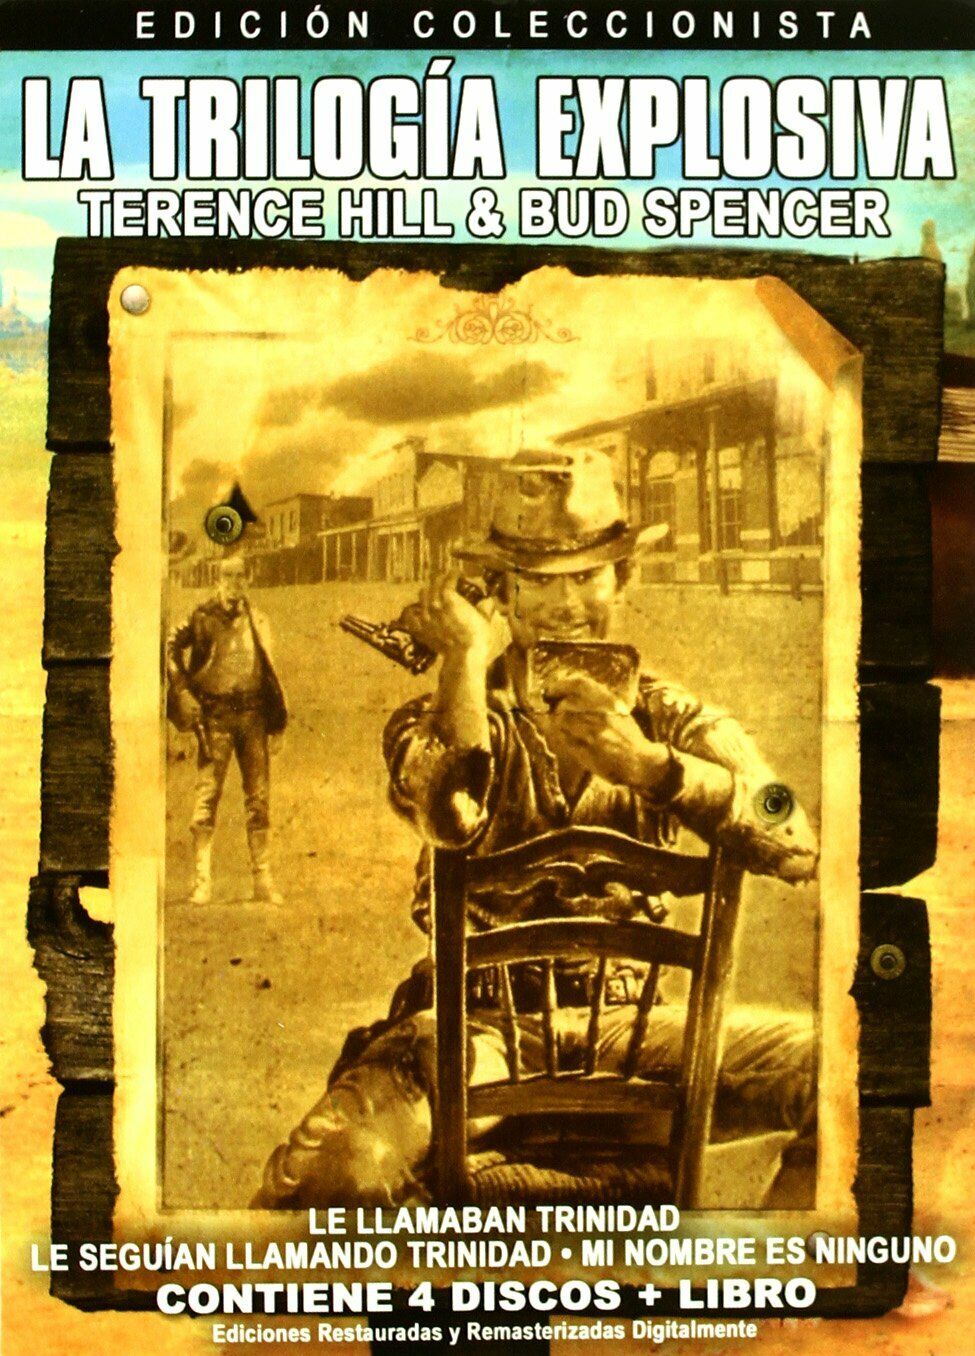 La trilogia explosiva dvd Terence Hill Bud Spencer Pack nuevo precintado